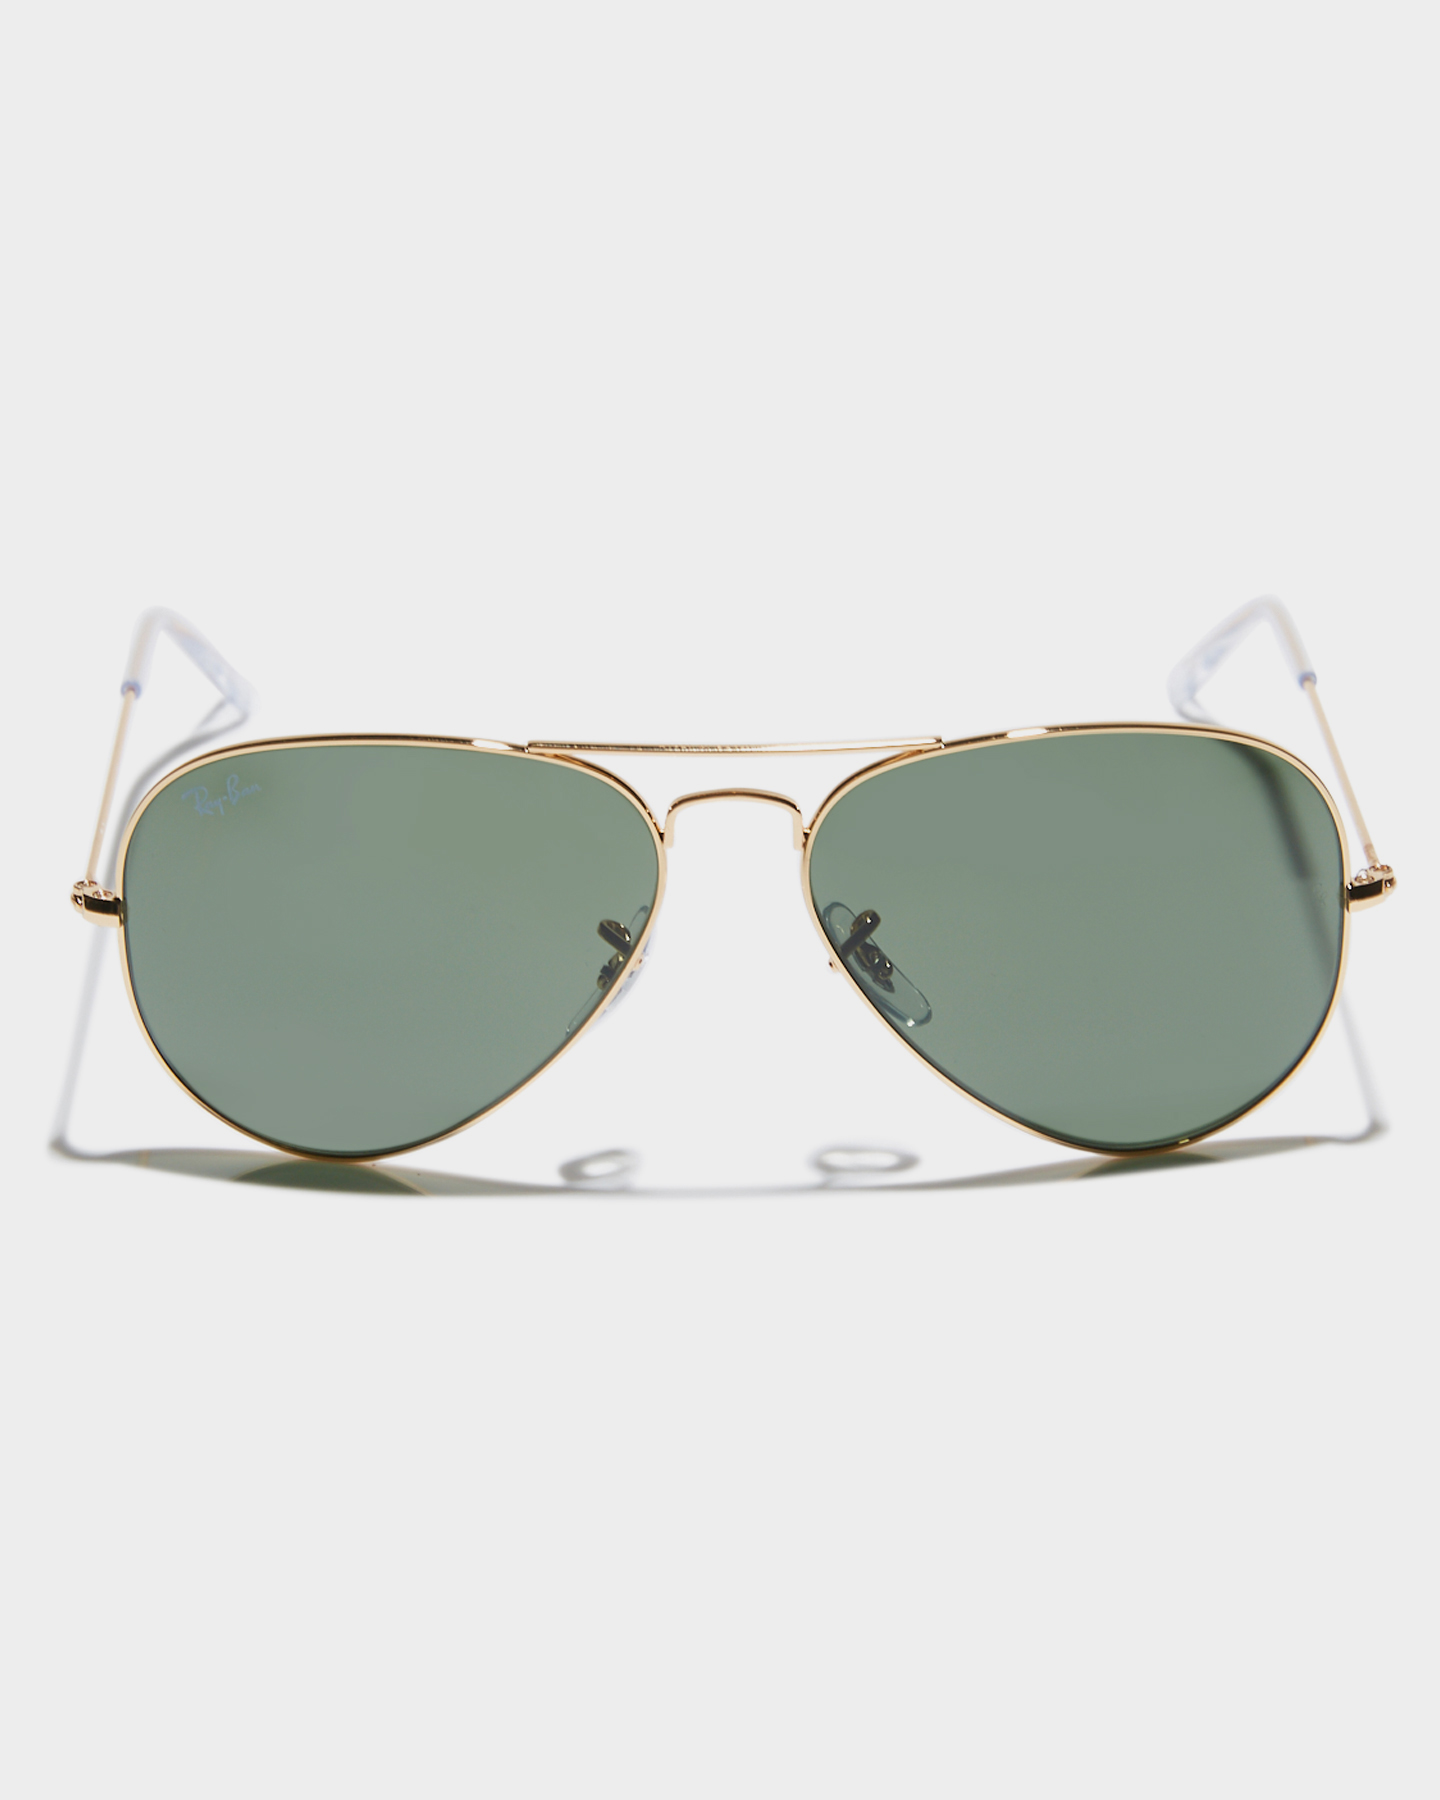 Ray-Ban Aviator 58 Sunglasses - Arista Grey Green | SurfStitch